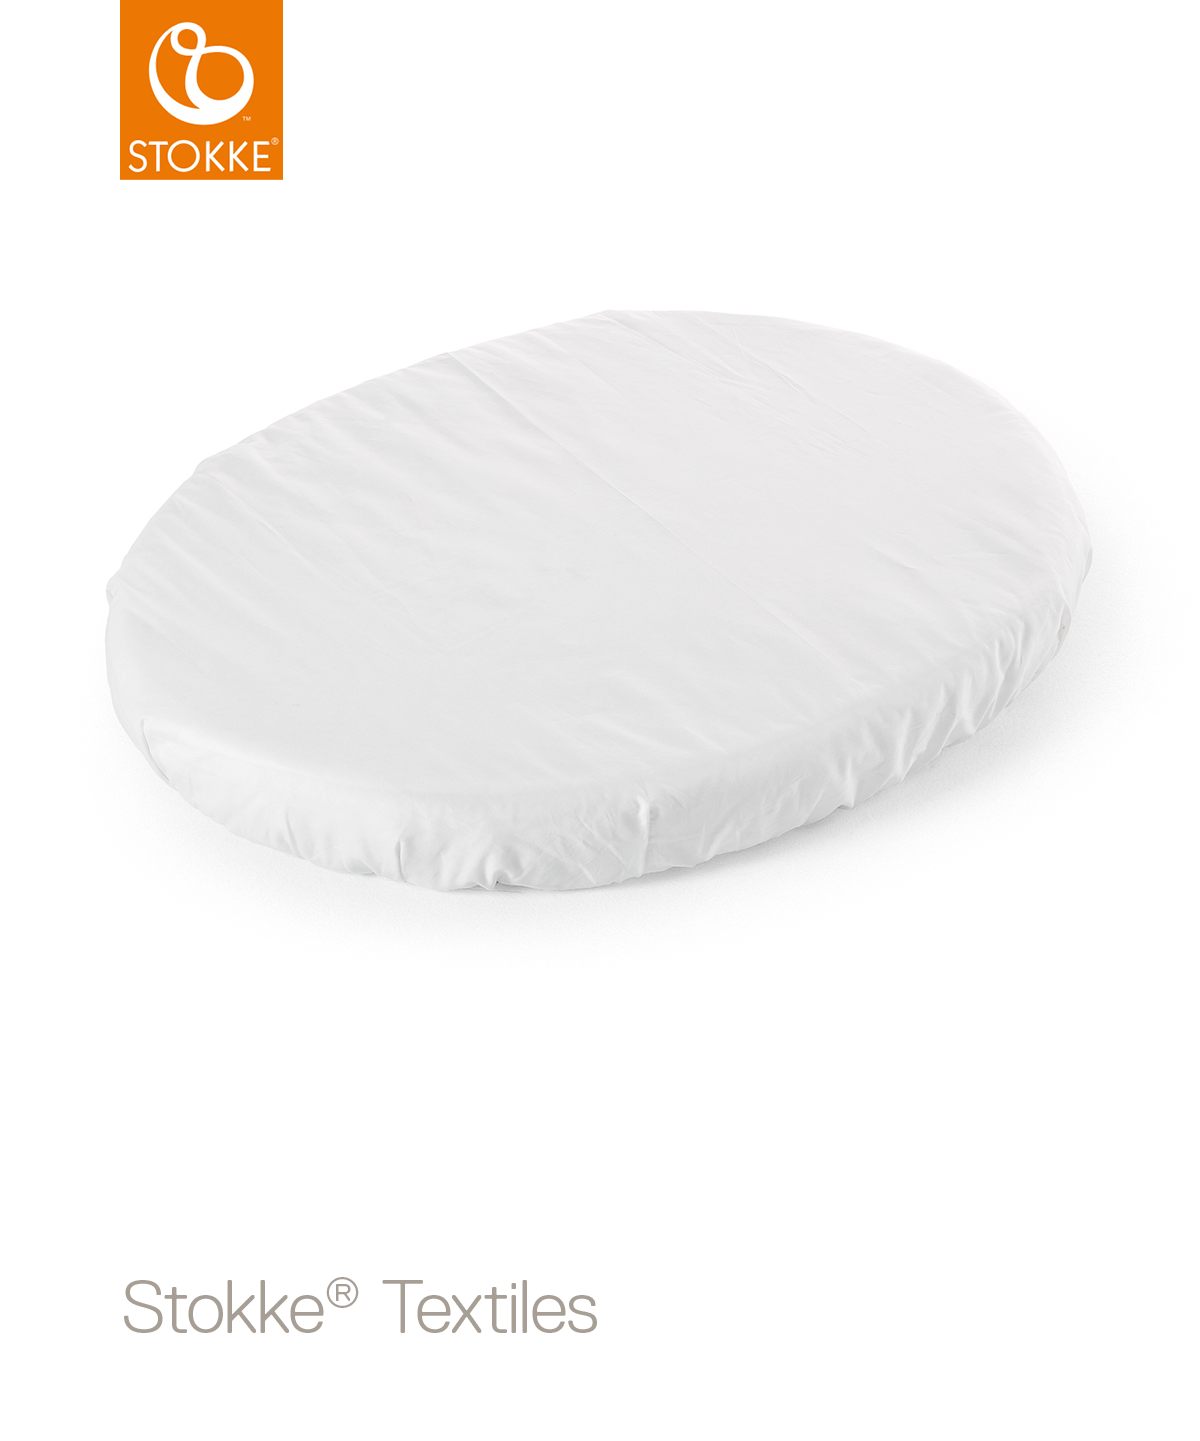 Stokke® Sleepi™ Mini Fitted Sheet - 80 cm.